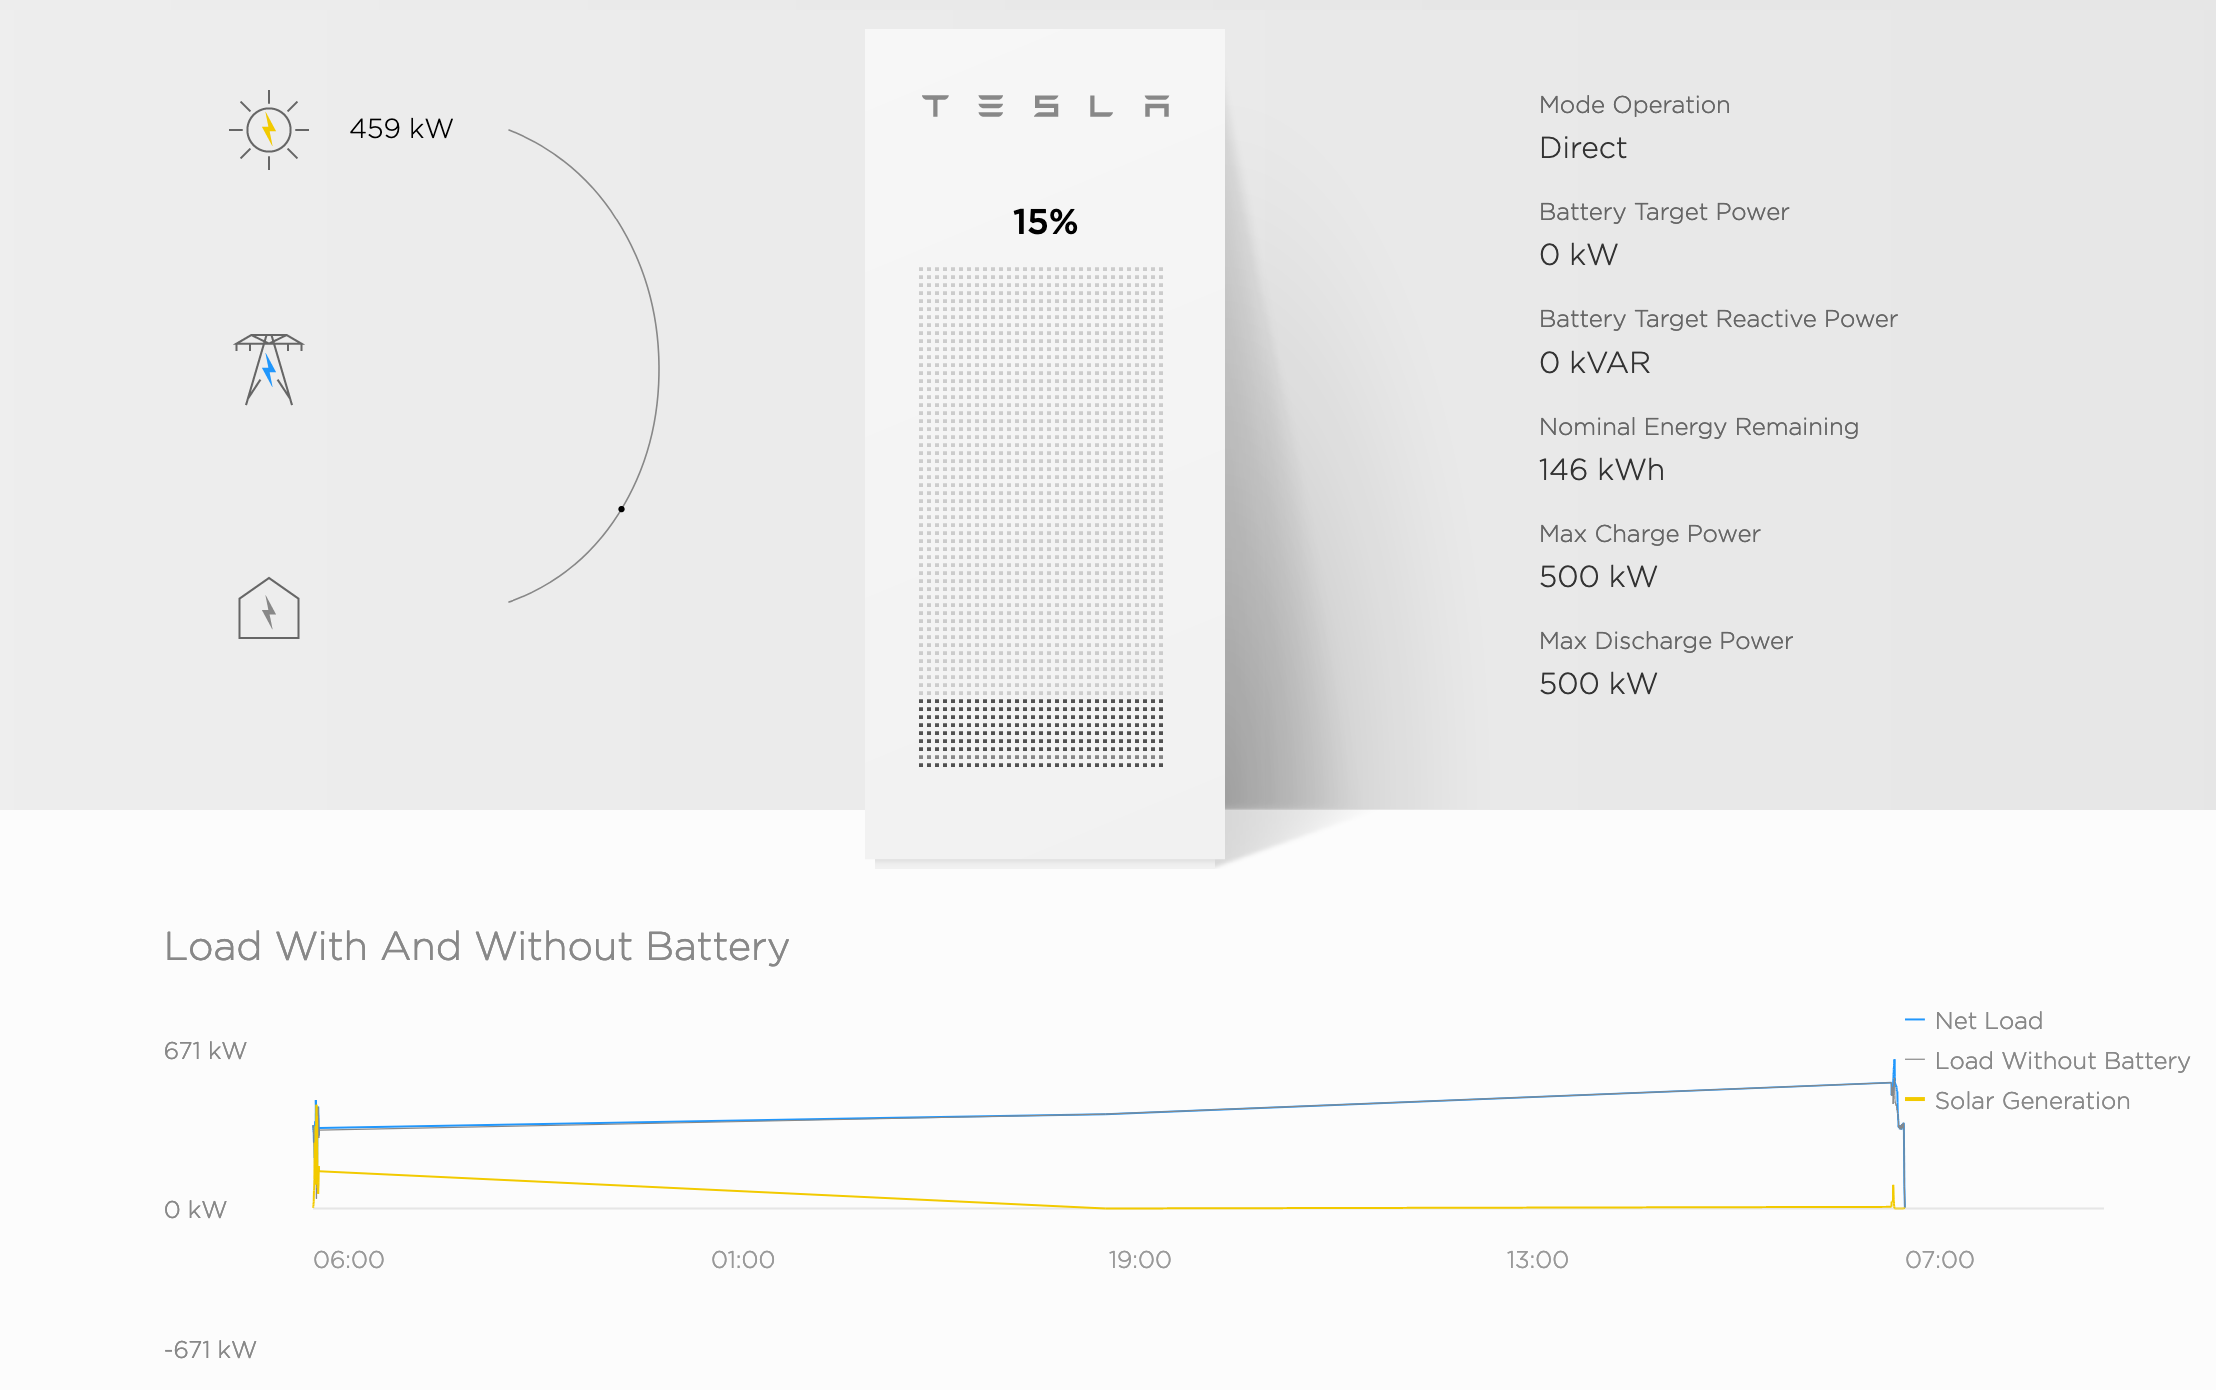 Example: Tesla PowerPack Charging Status